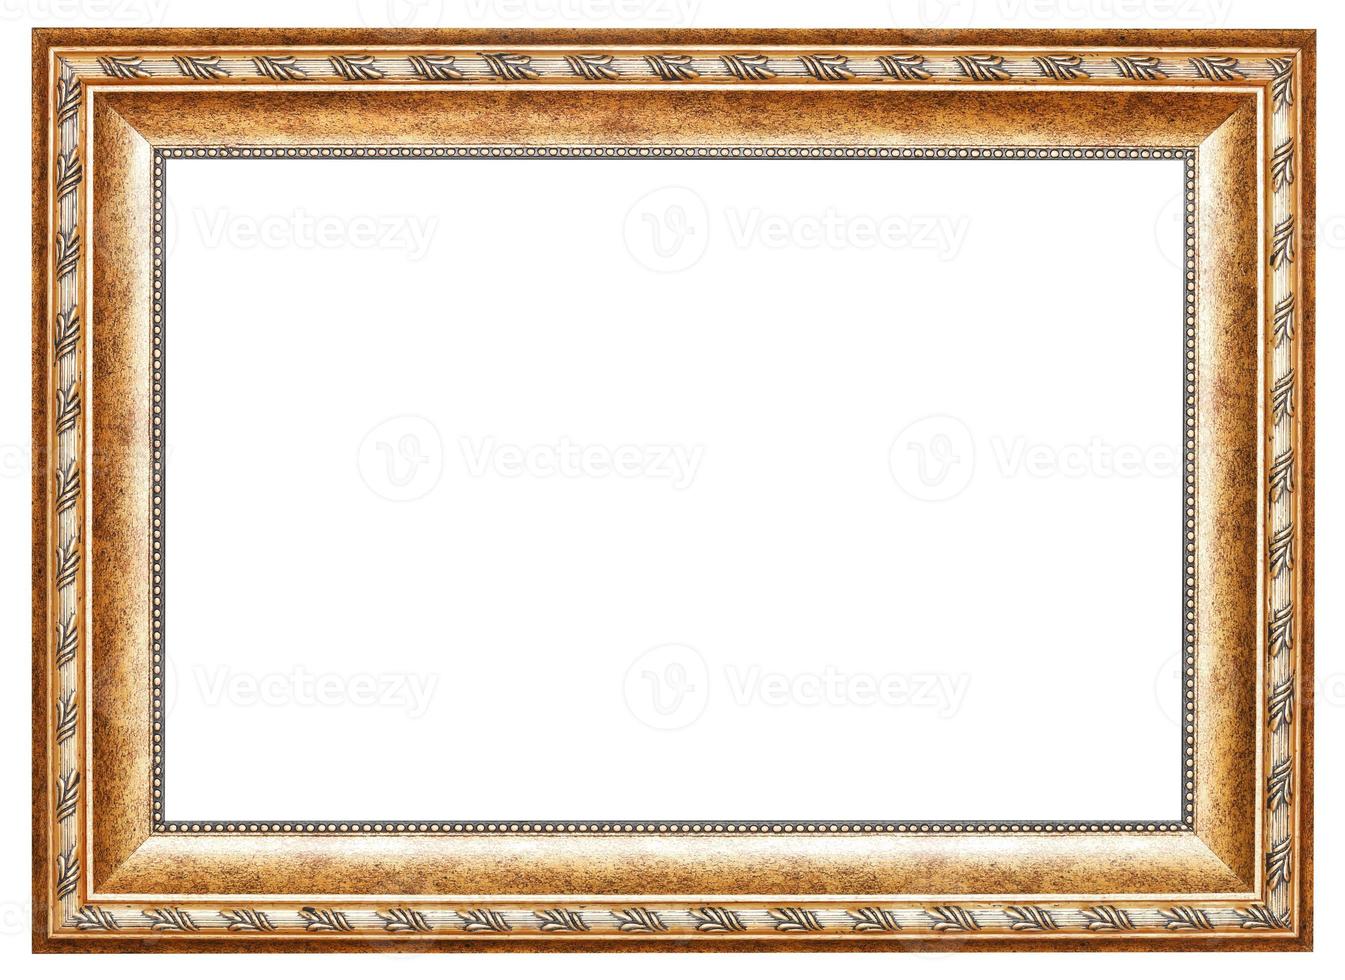 marco de madera ancho clásico de oro antiguo foto